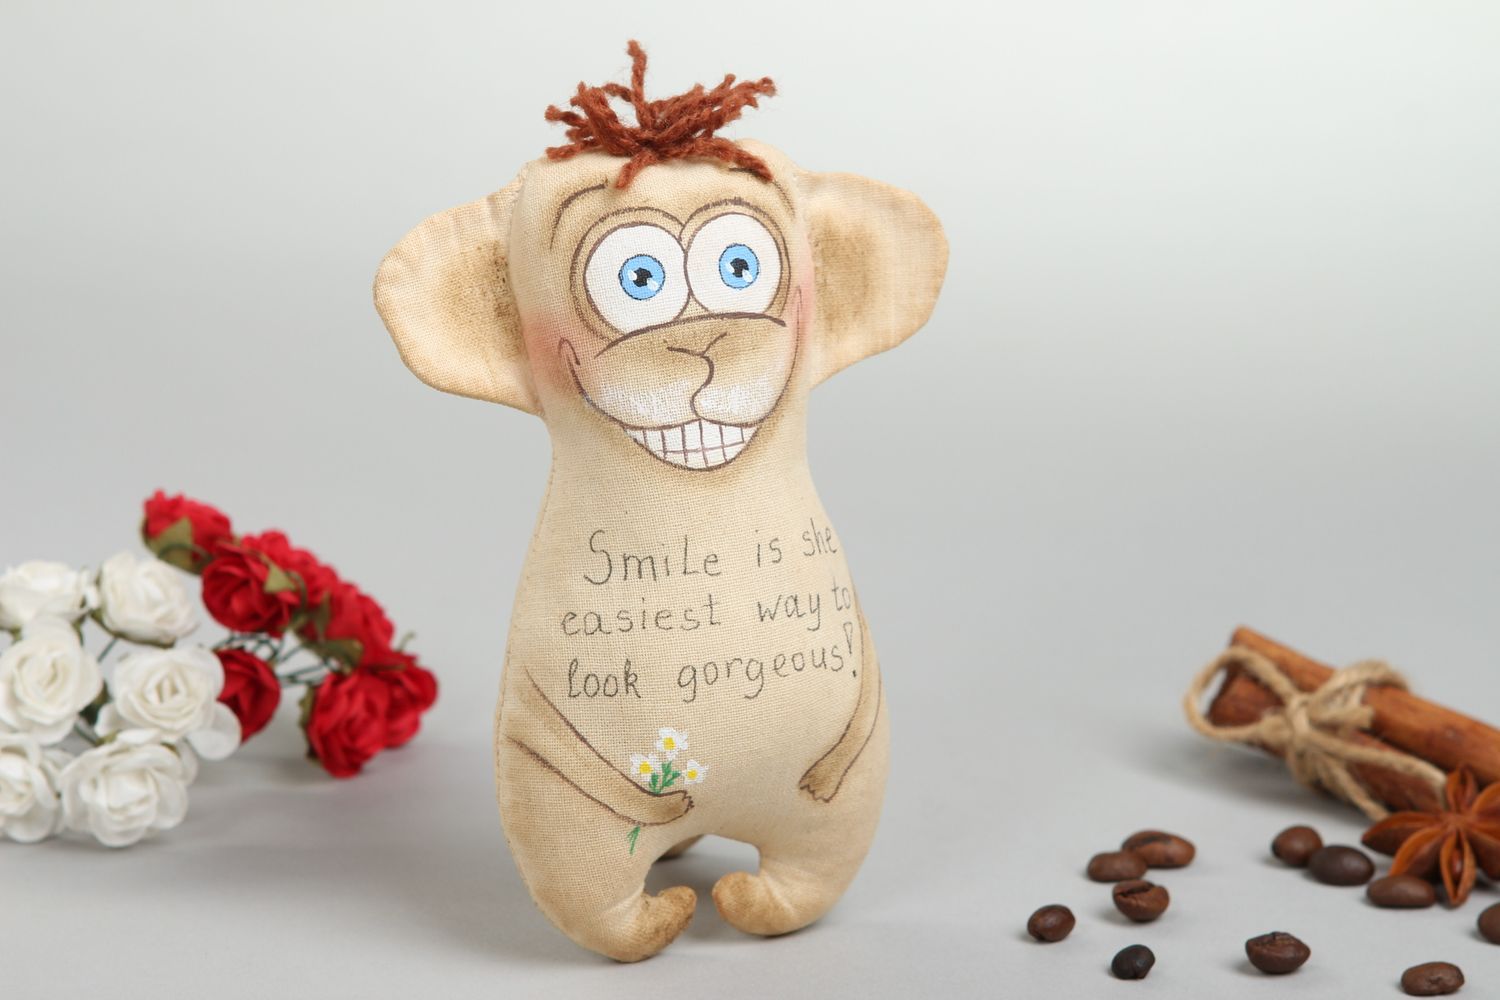 Handmade toy unusual animal toys for children nursery decor gift ideas photo 1